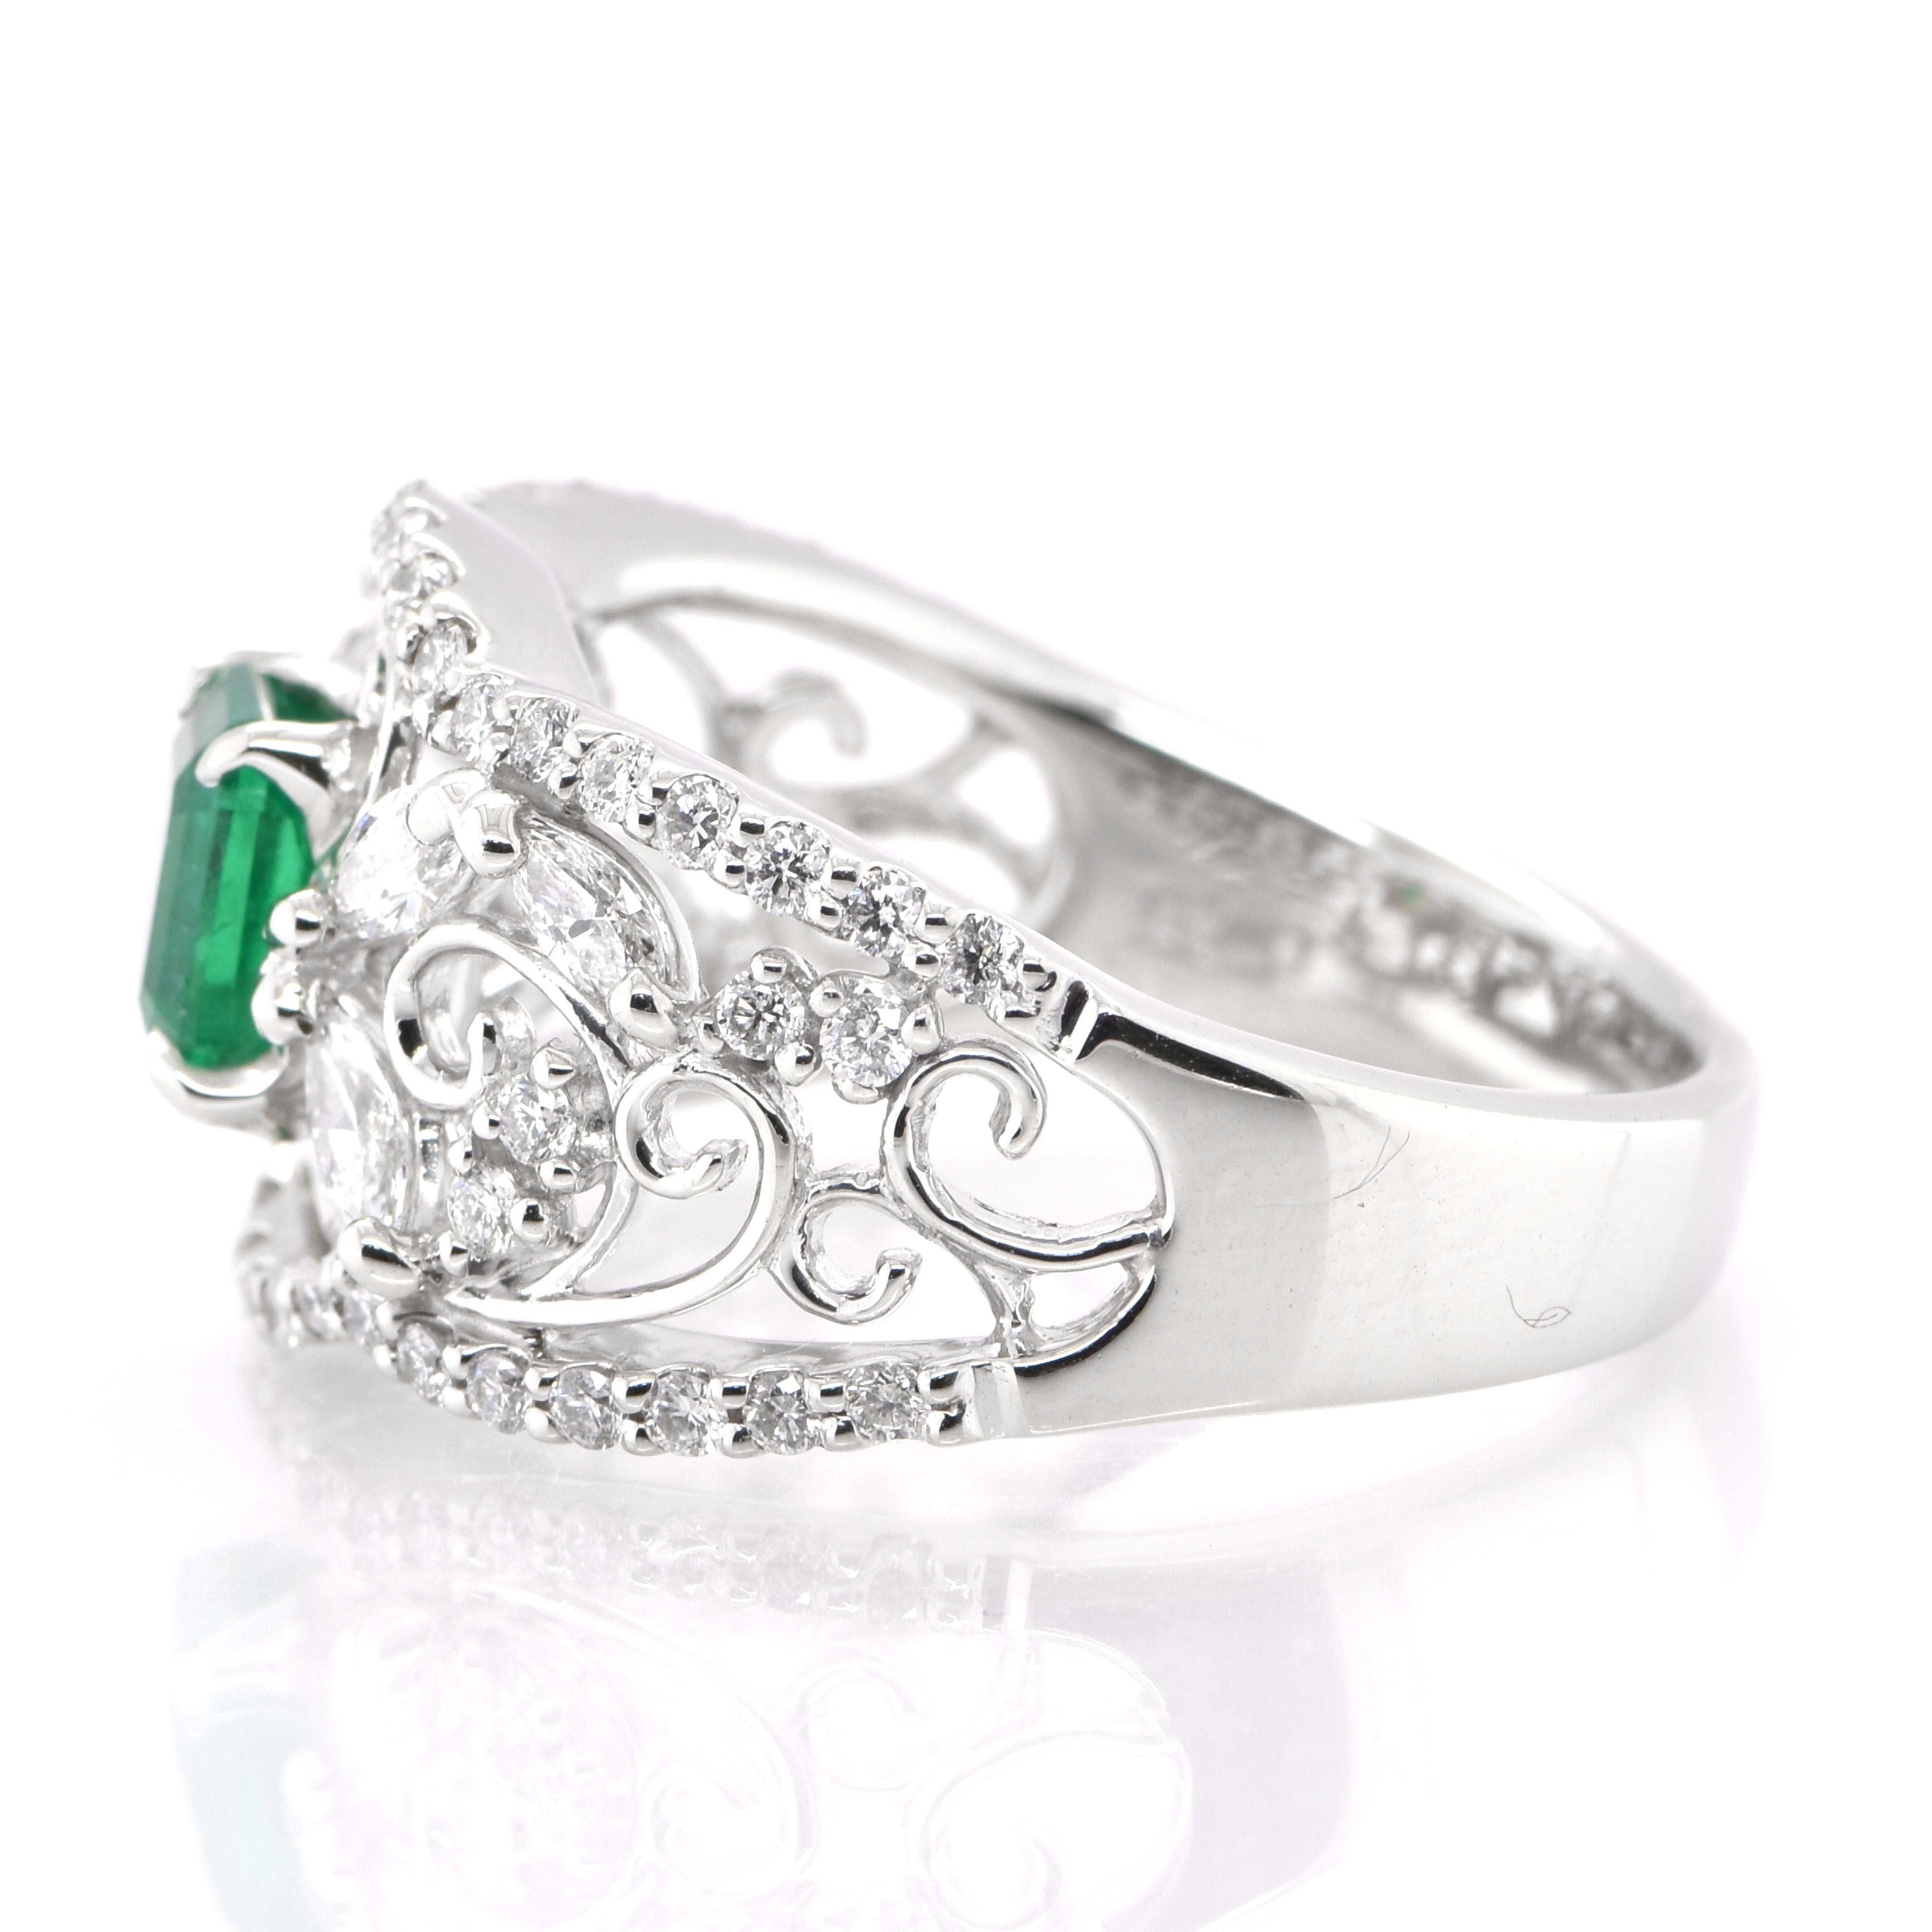 Emerald Cut 0.86 Carat Natural Vivid Green Emerald and Diamond Ring Set in Platinum